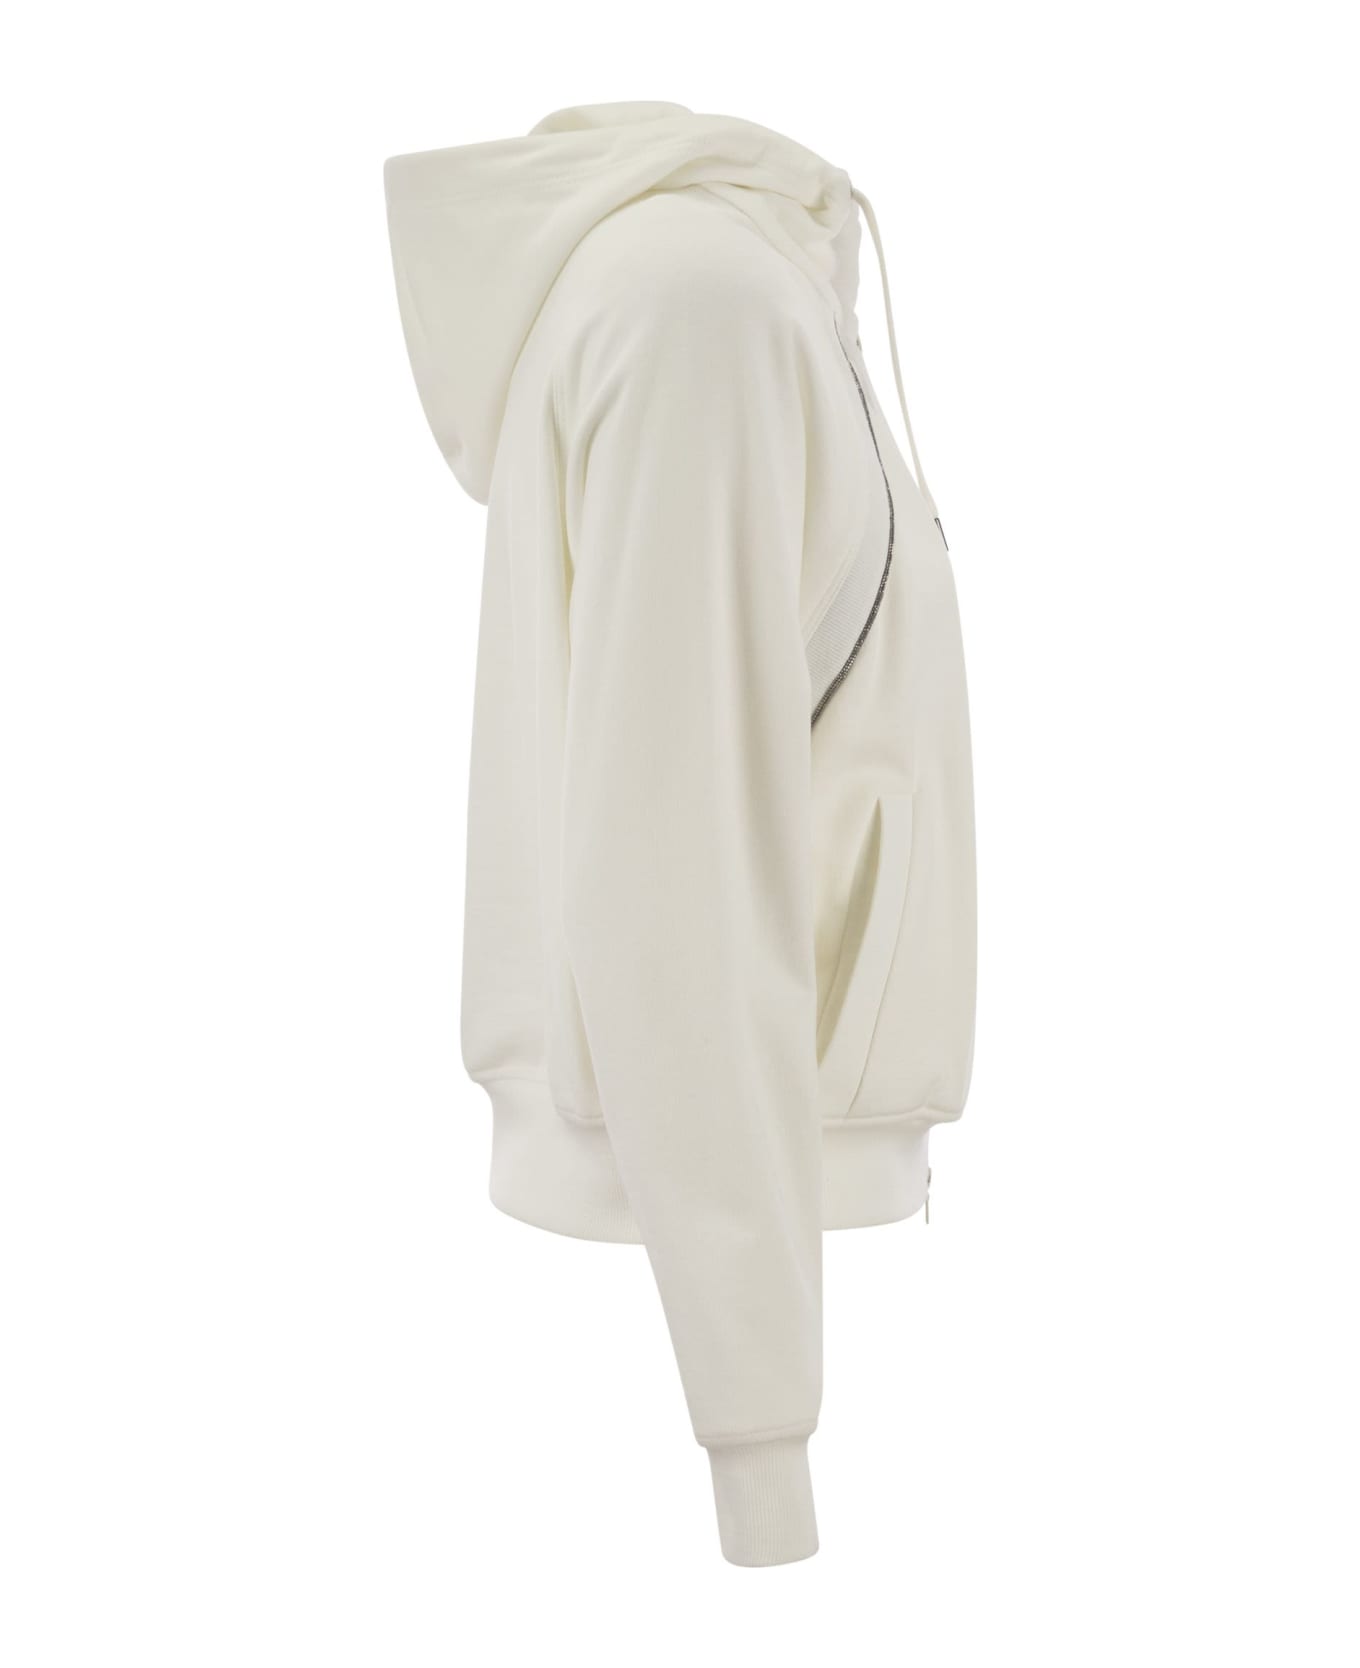 Brunello Cucinelli Smooth Cotton Fleece Hooded Topwear - White